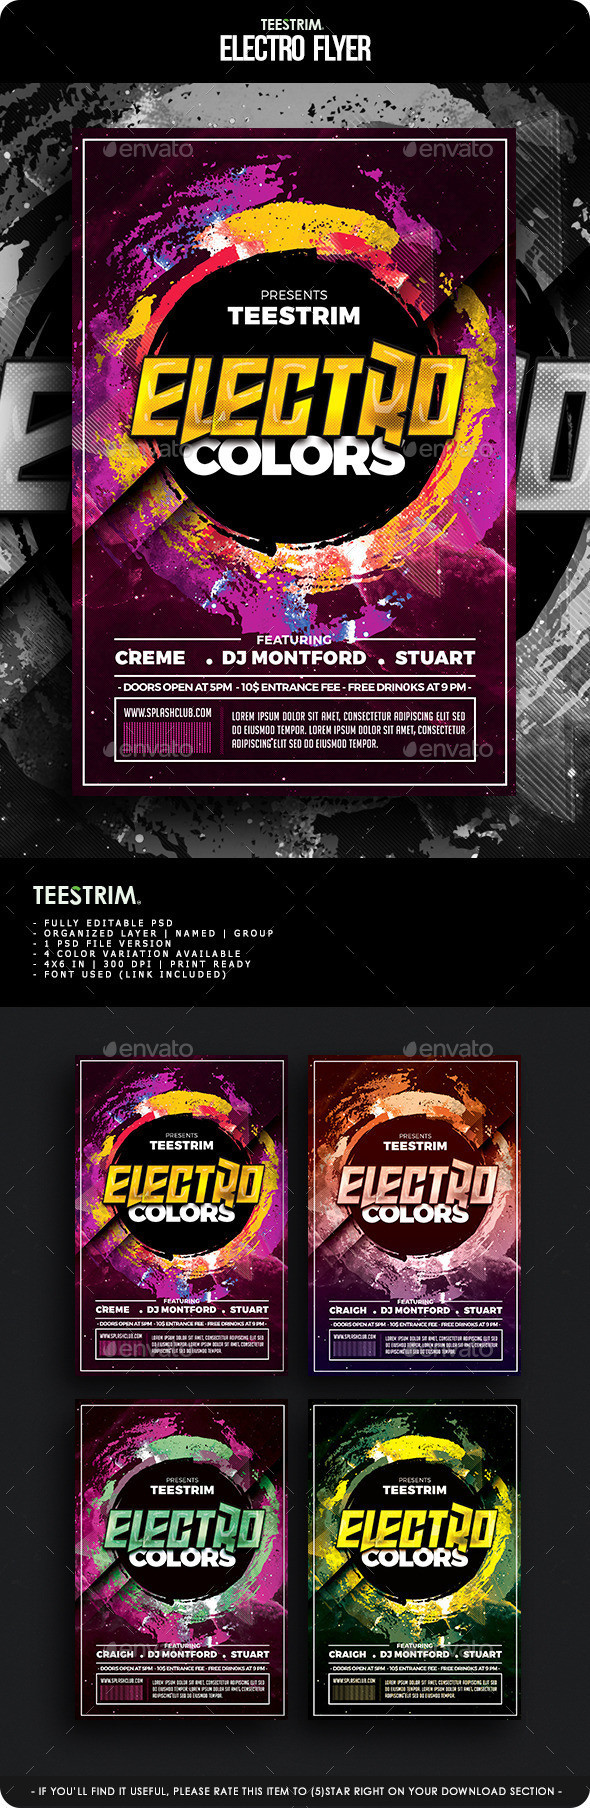 Teestrim flyer electro